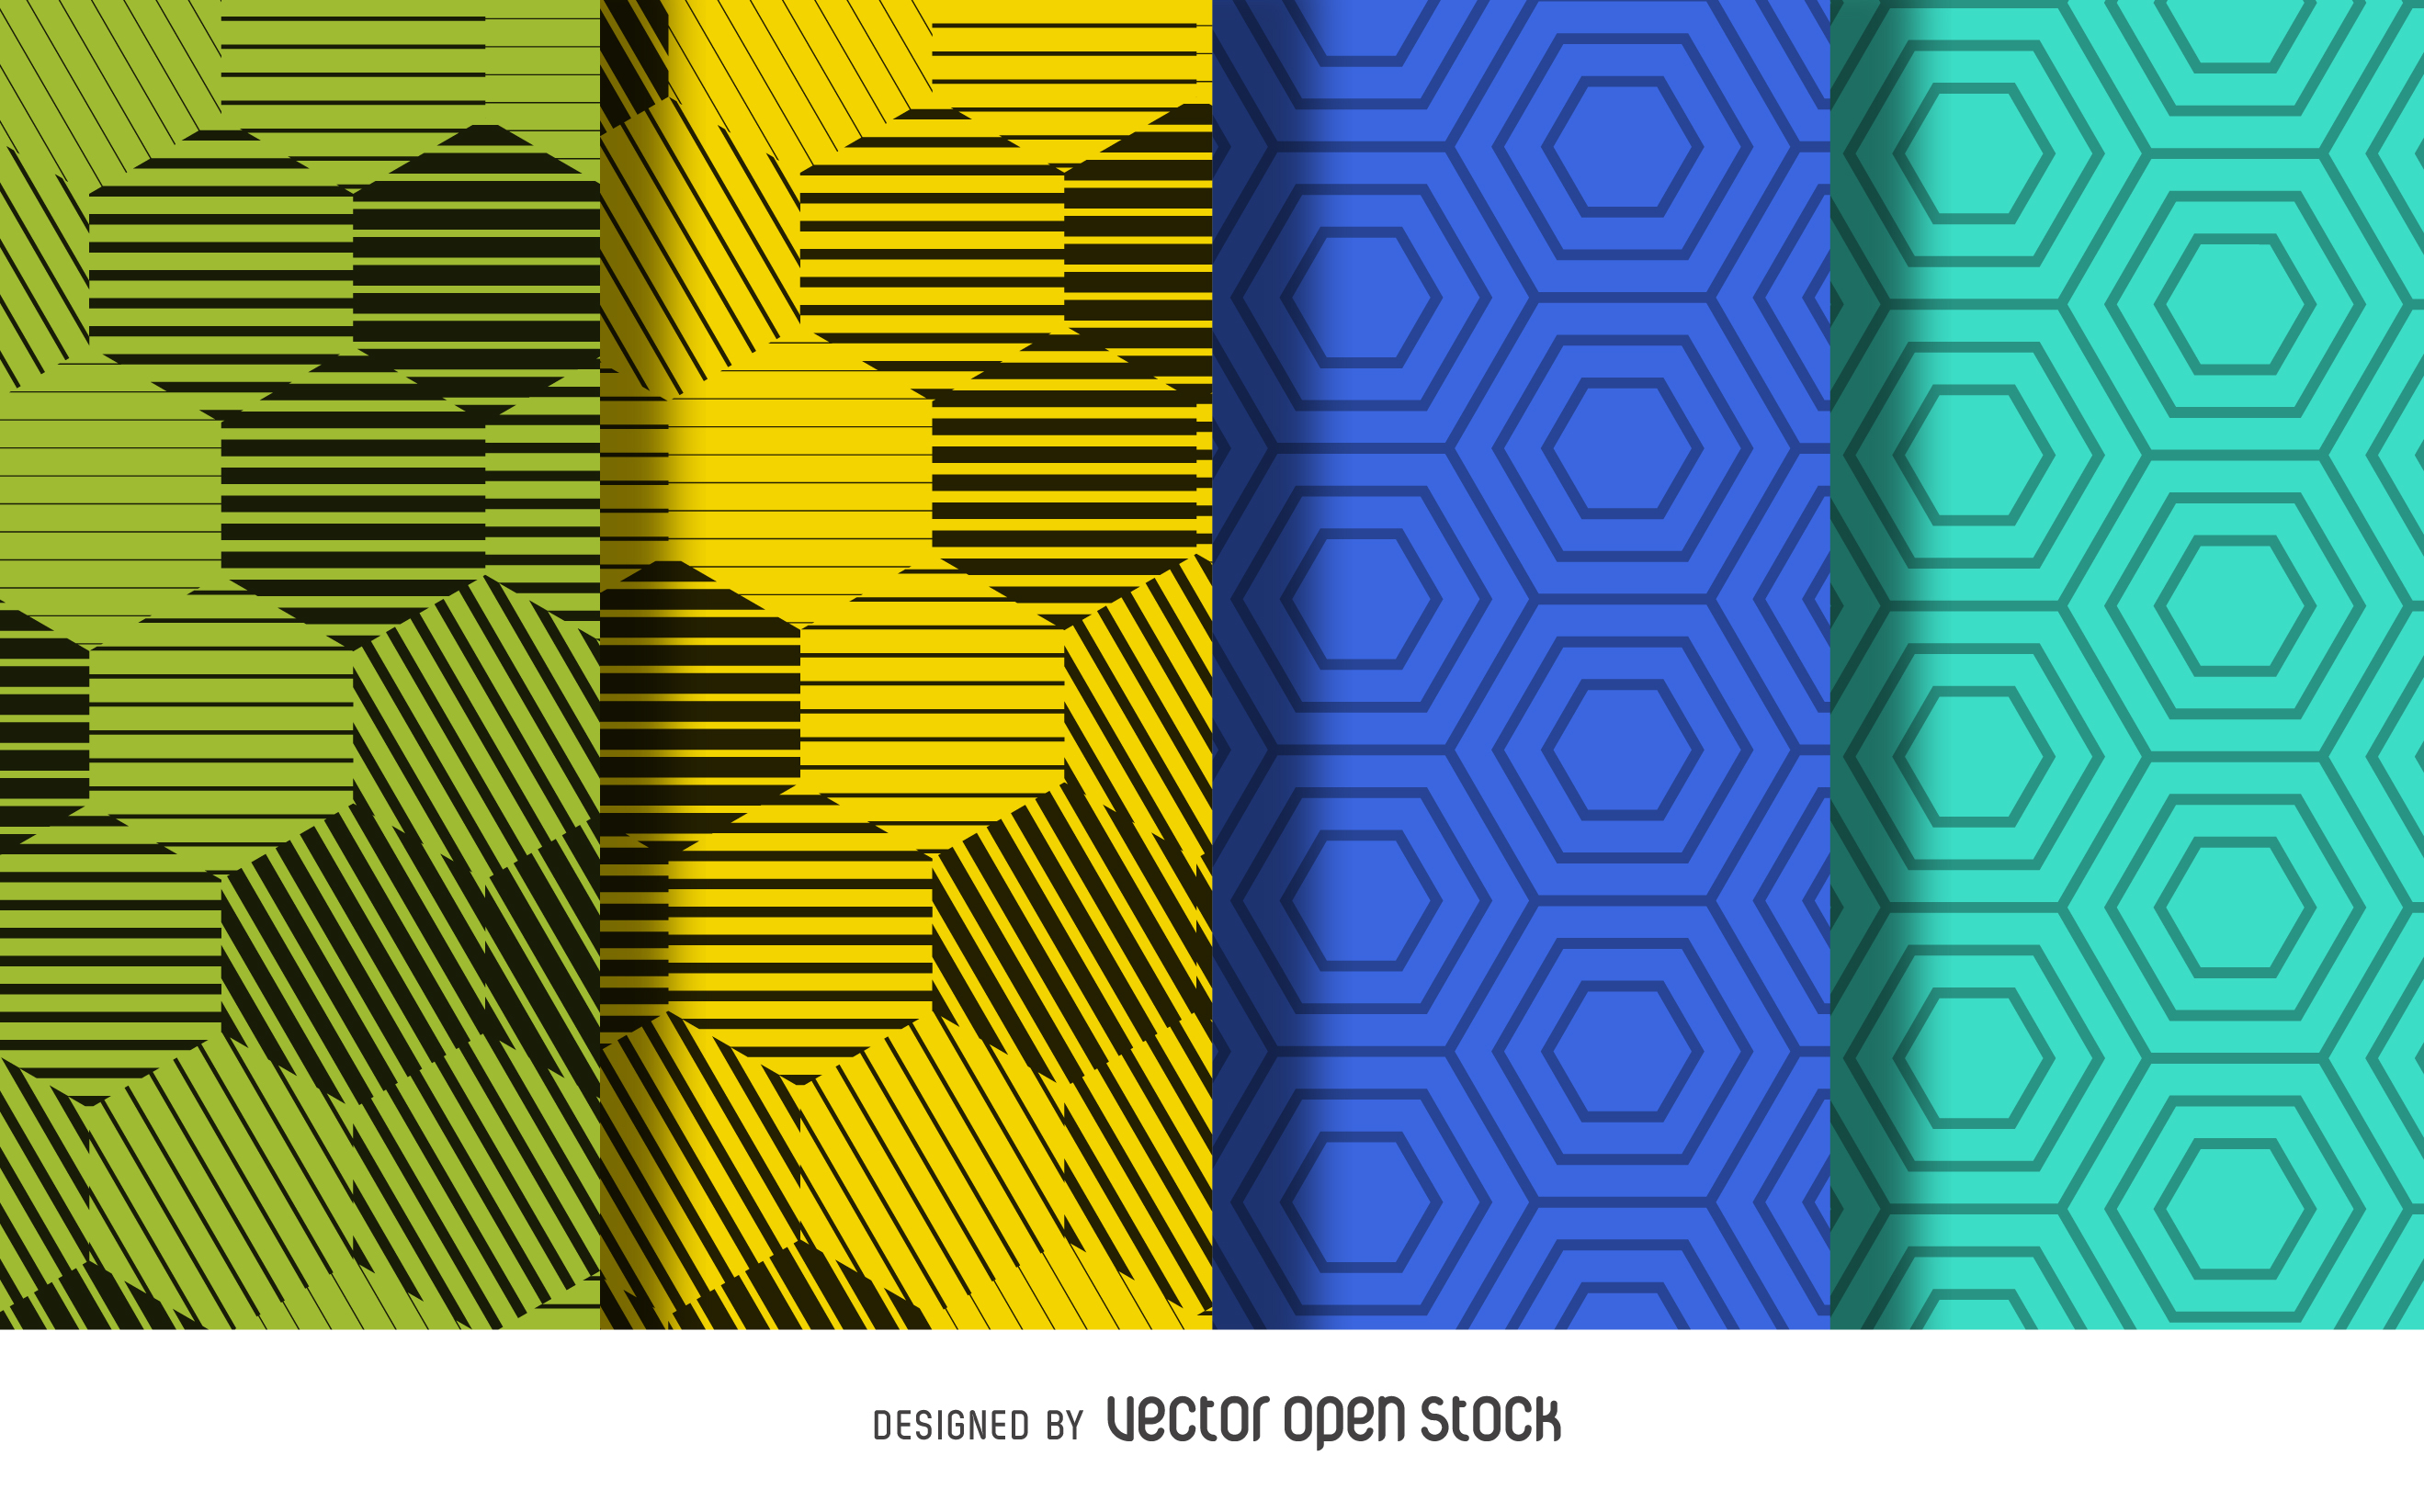 Hexagon pattern background set - Vector download